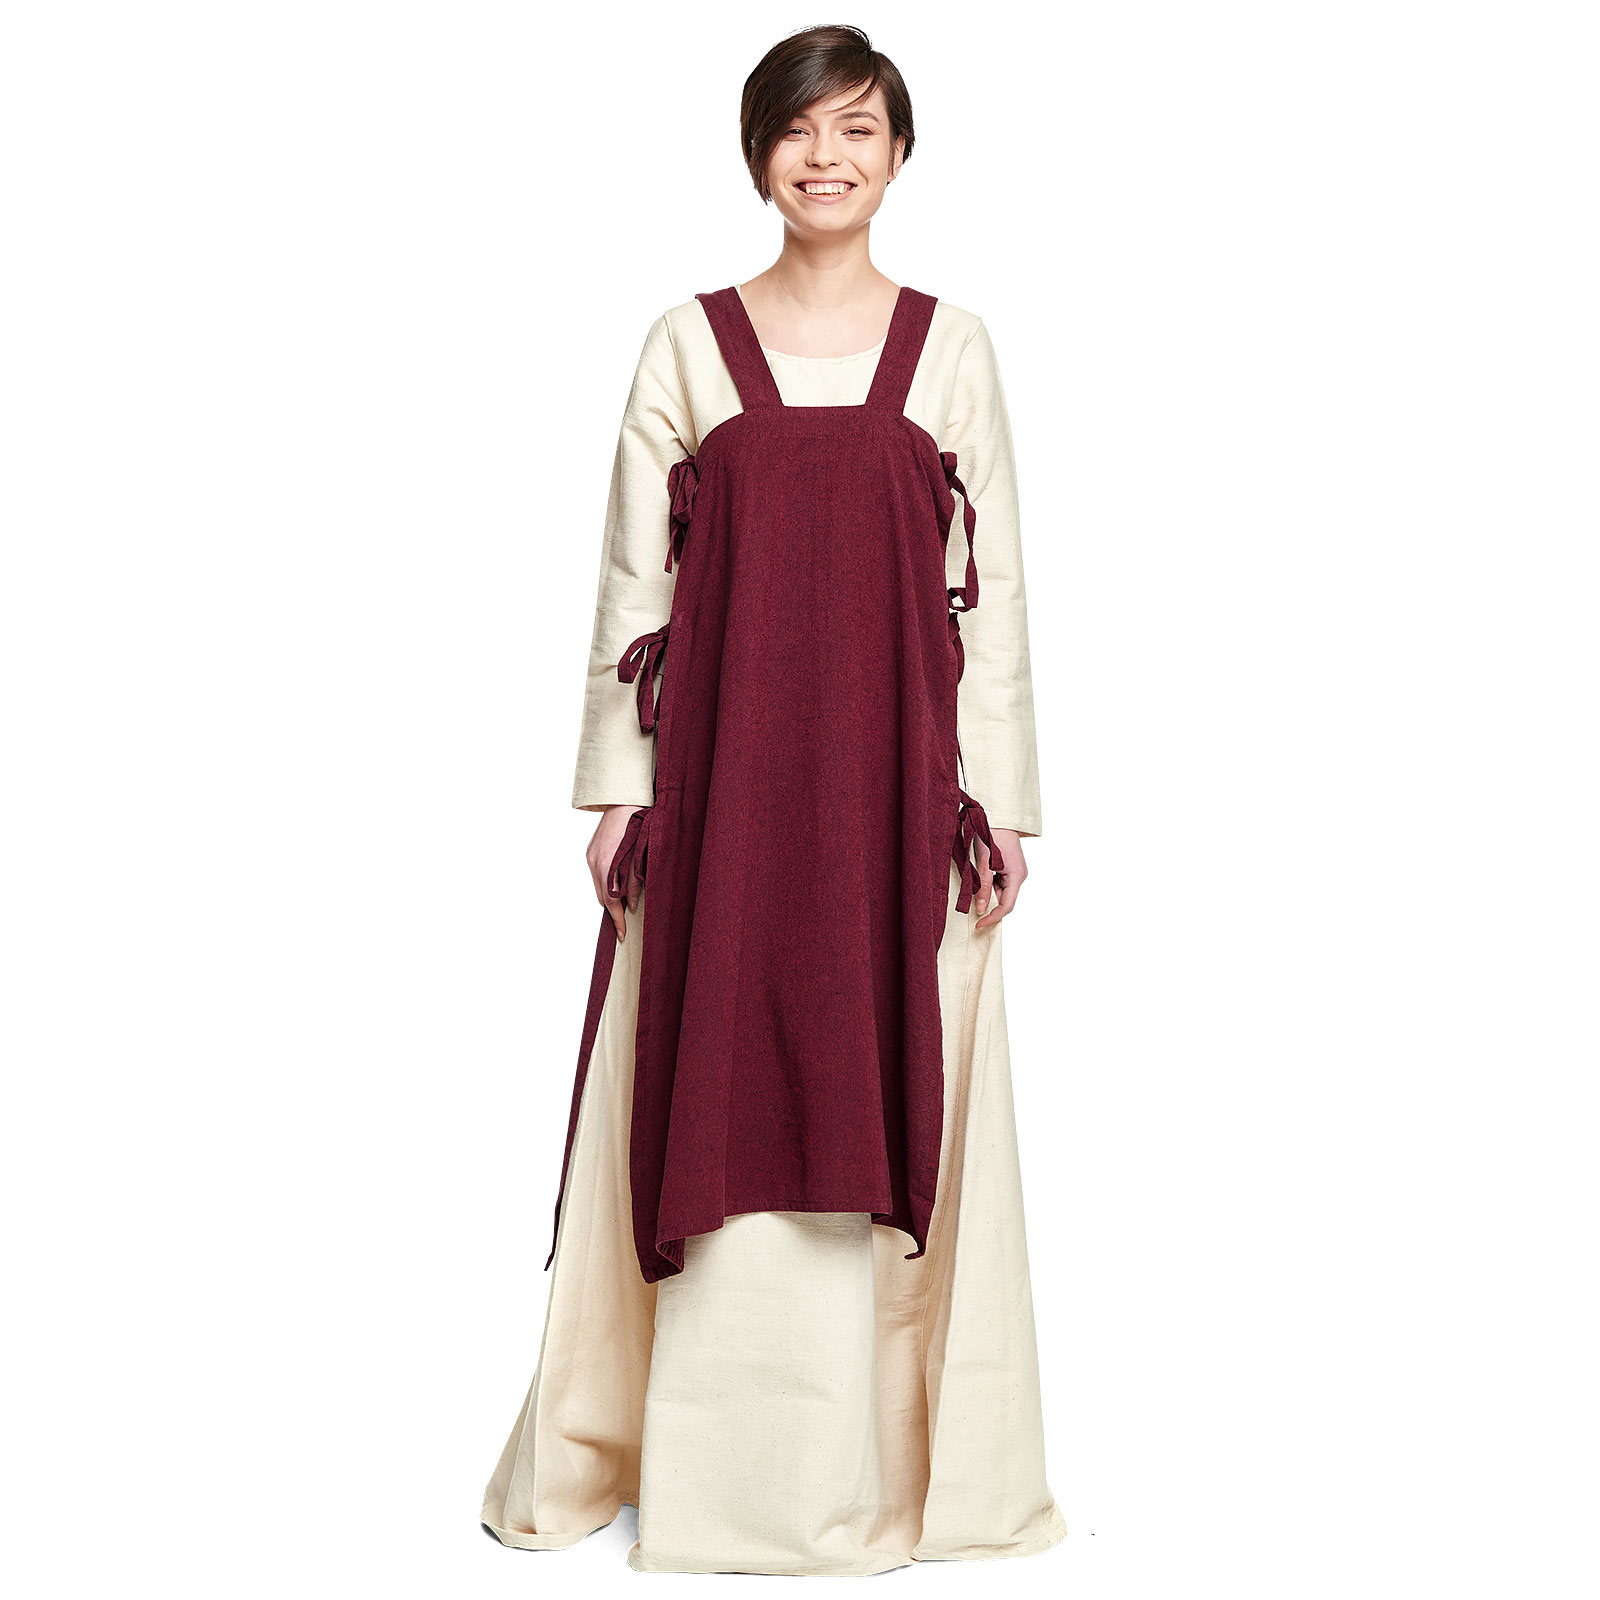 Sur-robe médiévale Hildegard rouge